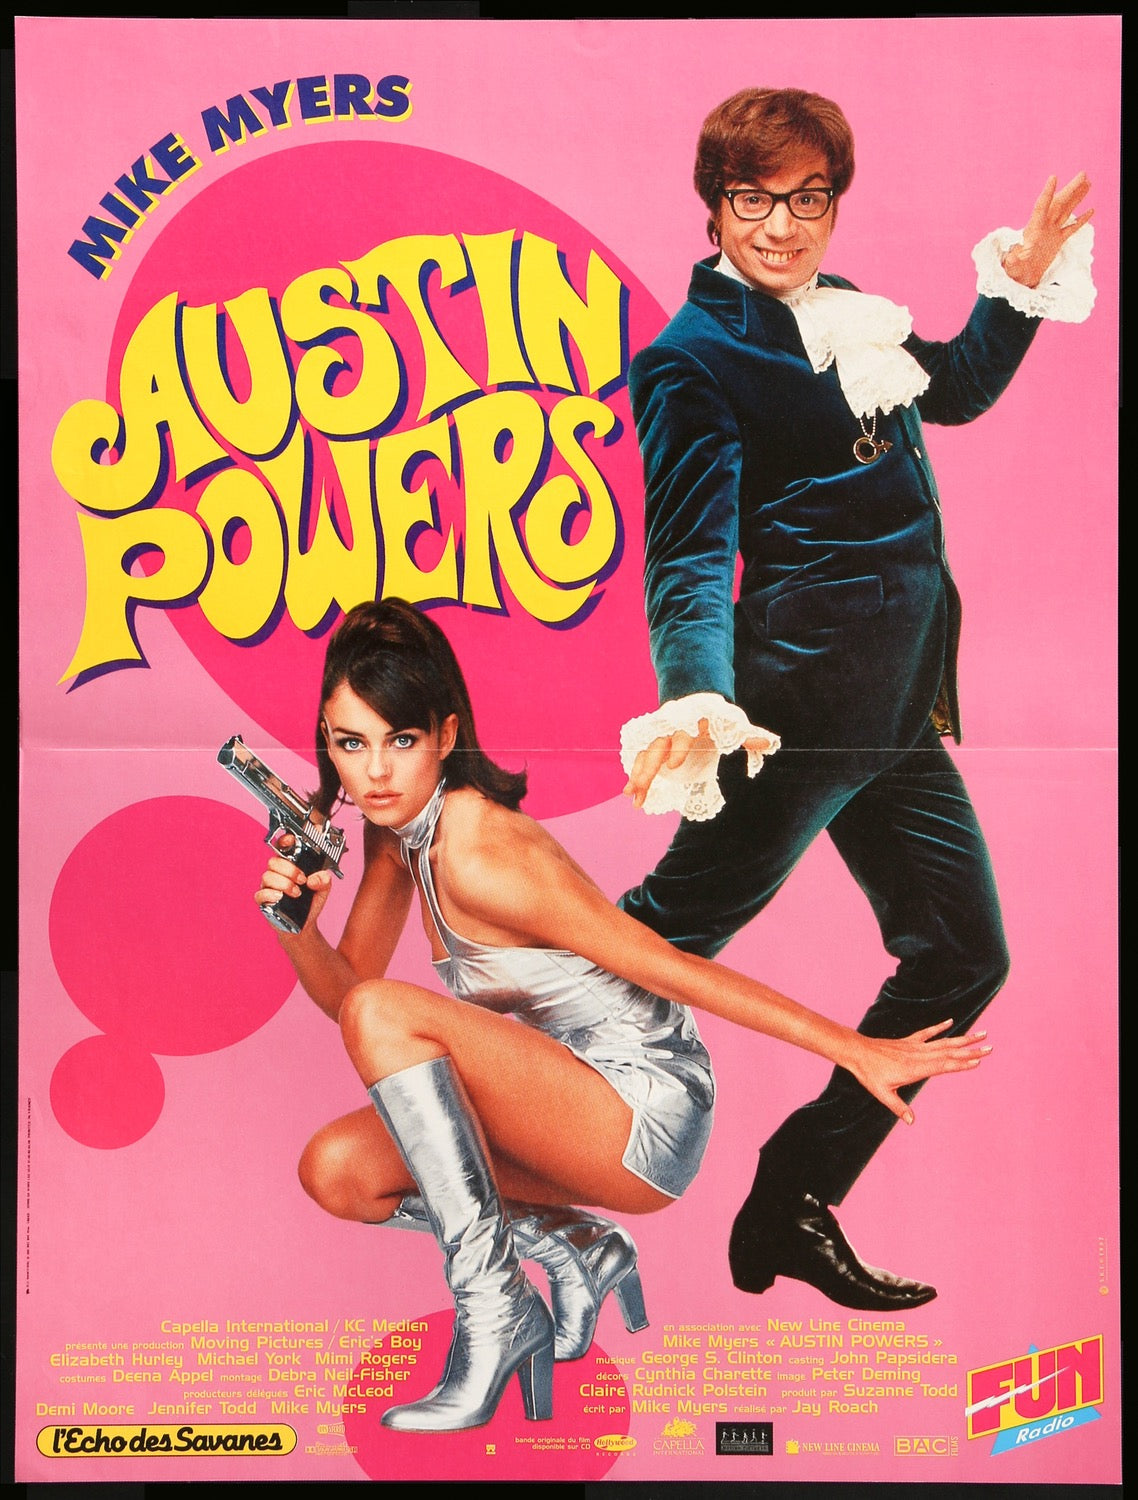 Austin Powers: International Man of Mystery (1997) original movie poster for sale at Original Film Art